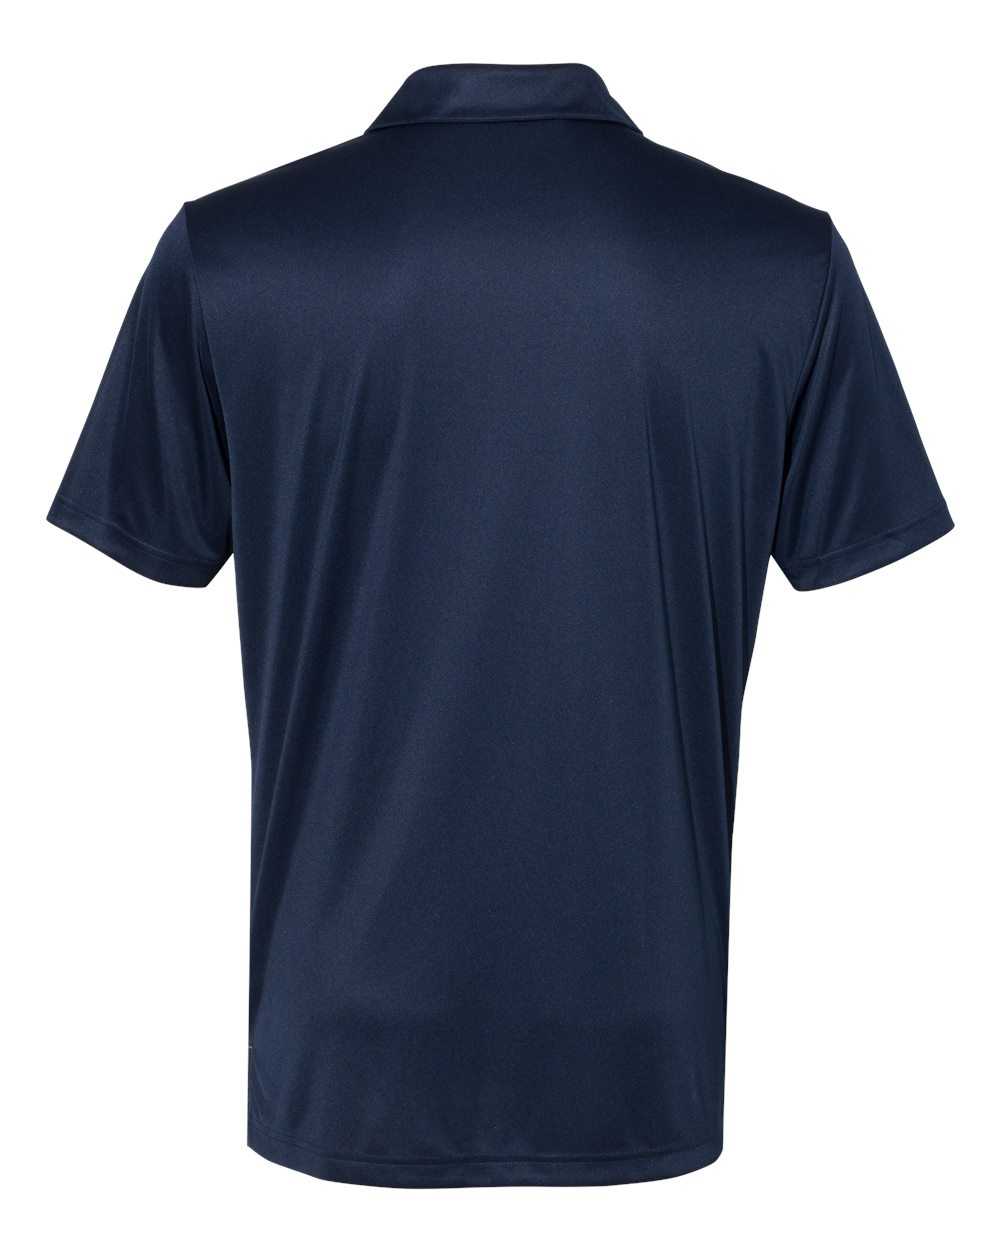 Adidas A236 Merch Block Sport Shirt - Collegiate Navy Grey Three Grey Five - HIT a Double